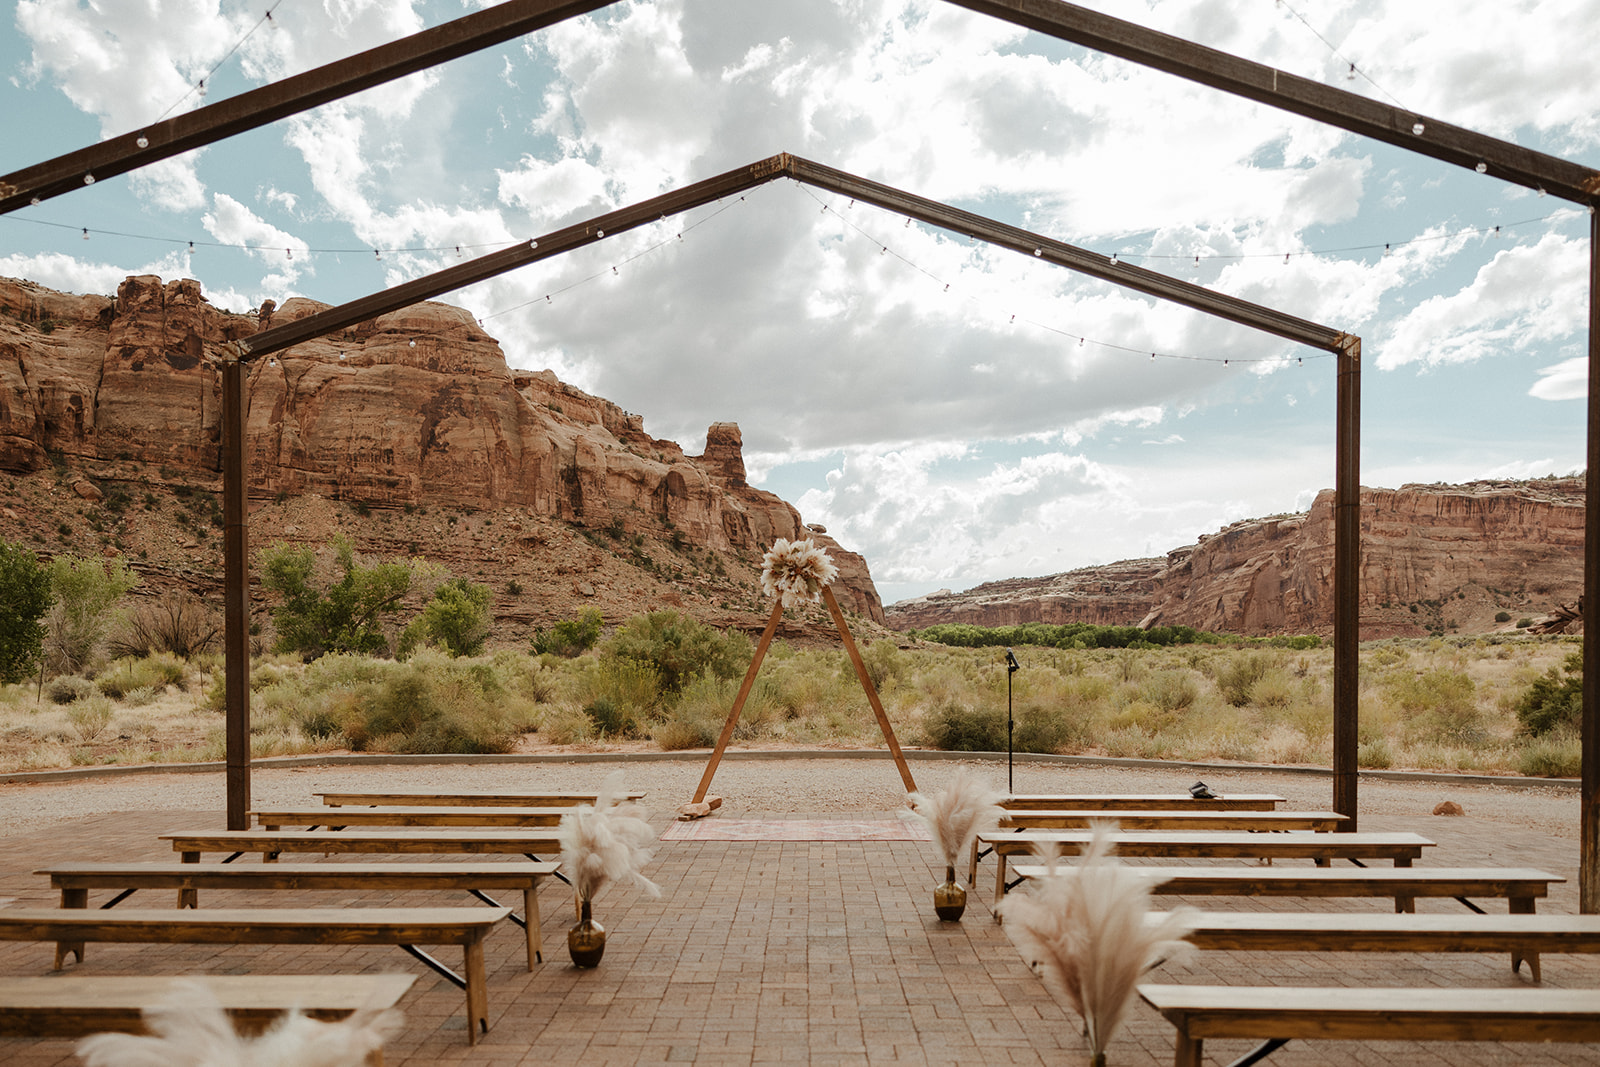 Stunning red earth wedding venue in Arizona!